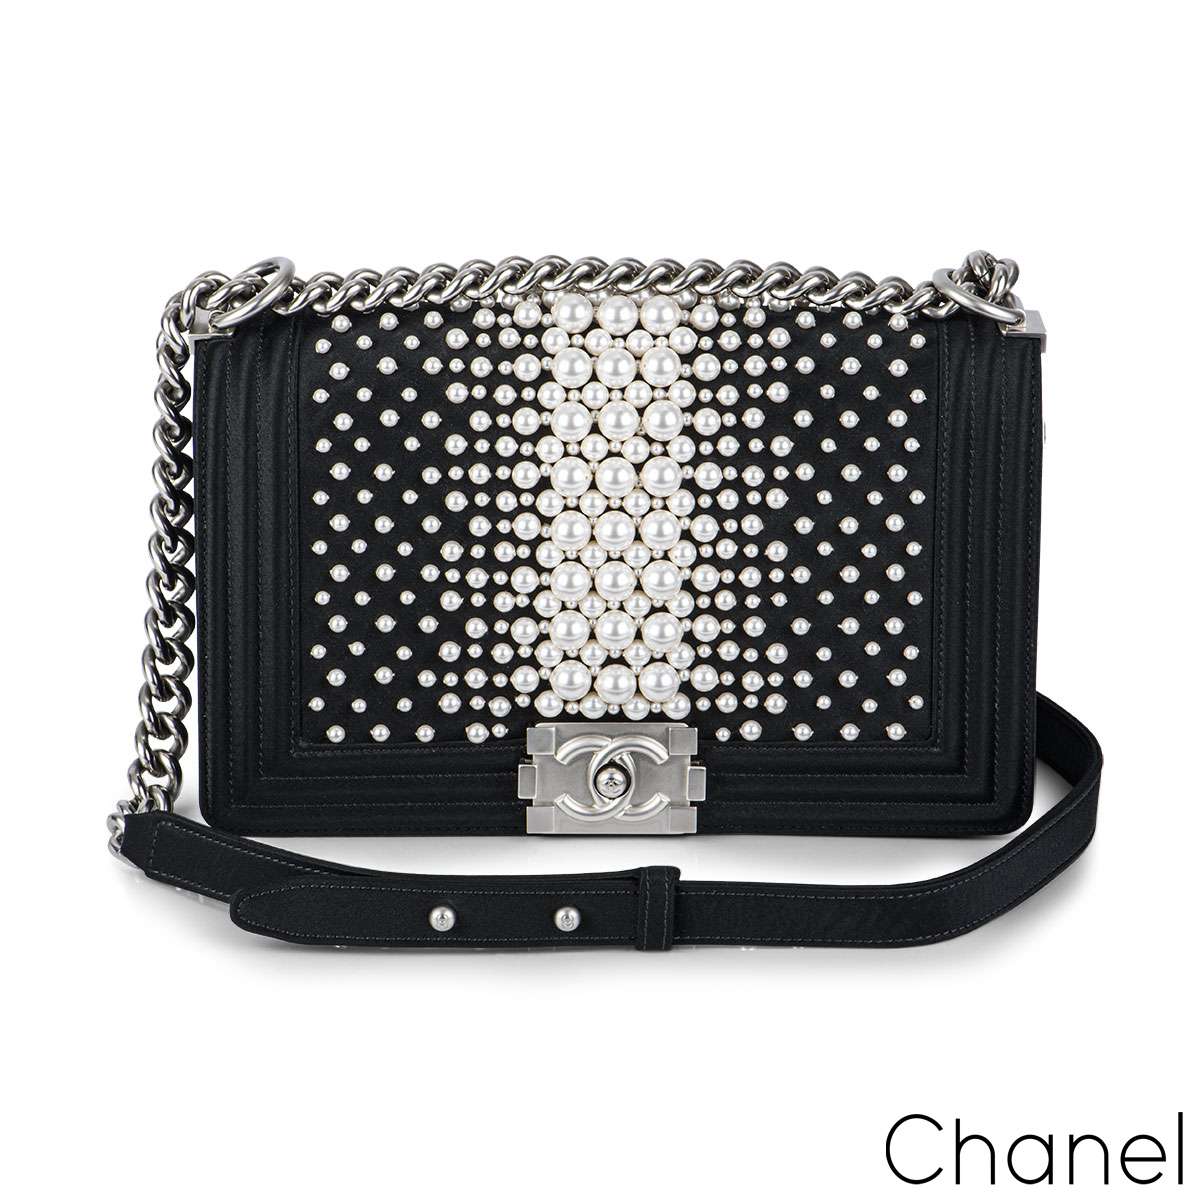 Chanel Iridescent Boy Bag The luxury brands Mermaid Bag